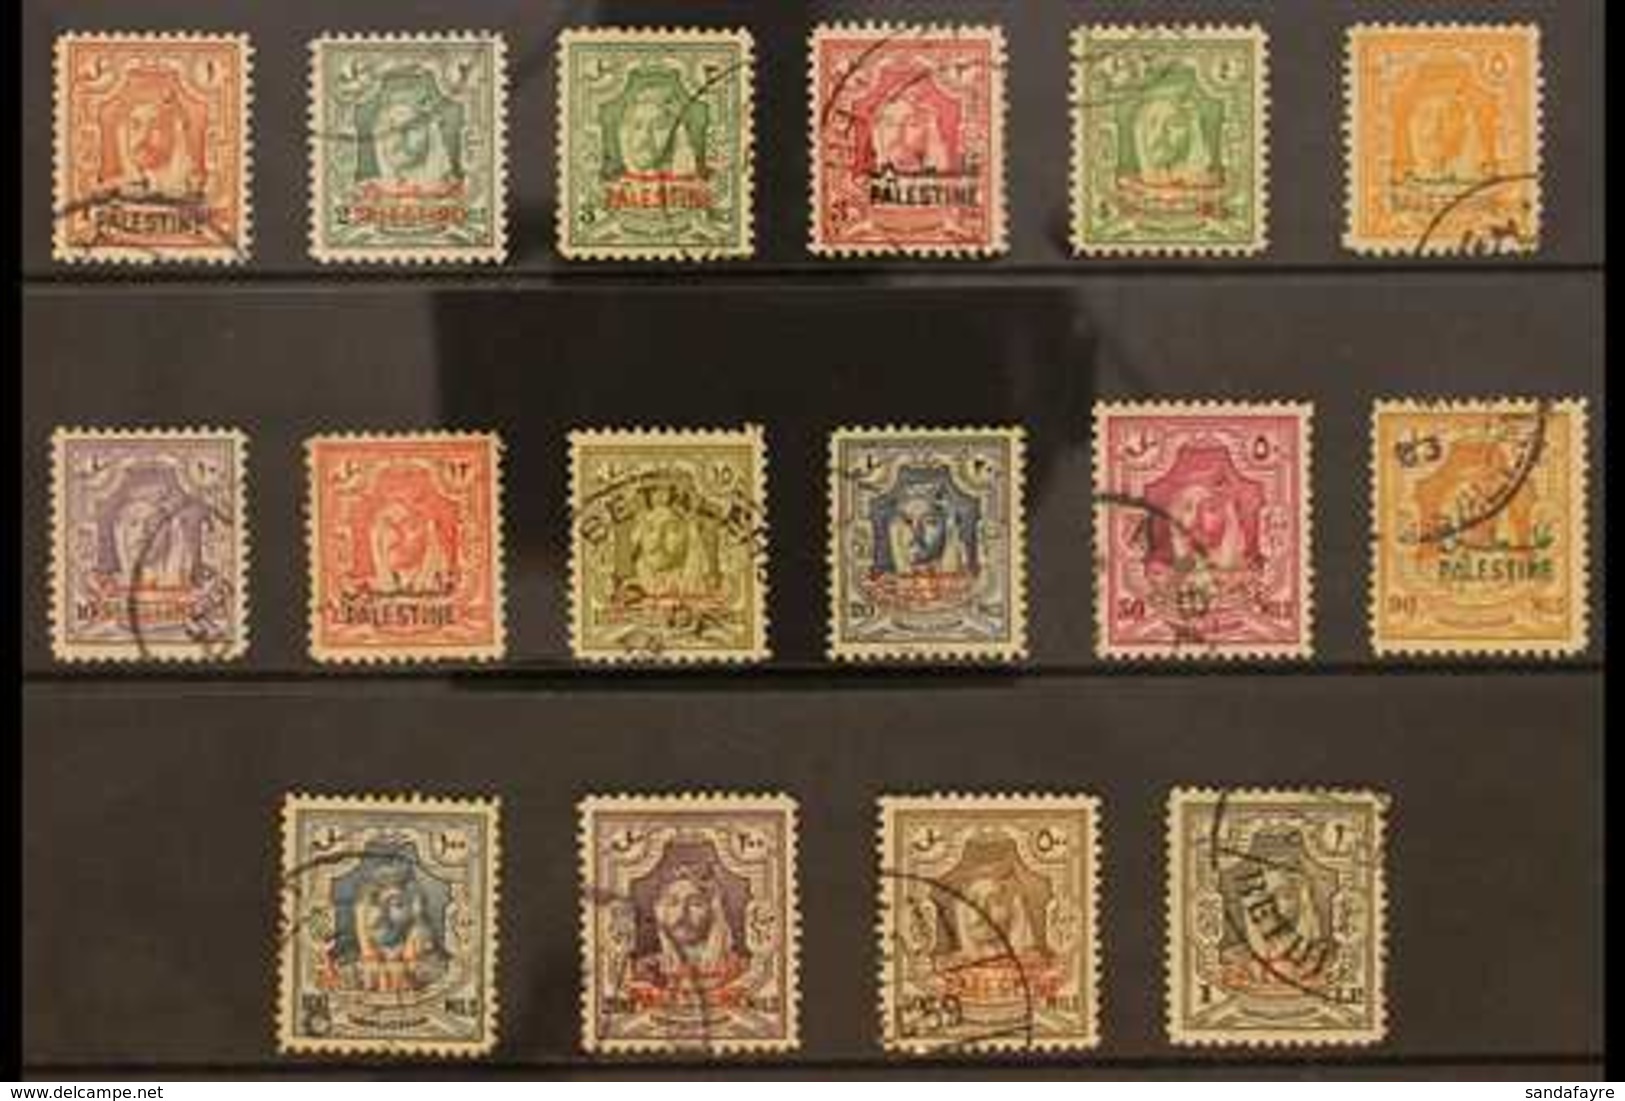 OCCUPATION OF PALESTINE 1948 Jordan Stamps Opt'd "PALESTINE", SG P1/16, Very Fine Used (16 Stamps) For More Images, Plea - Jordanië